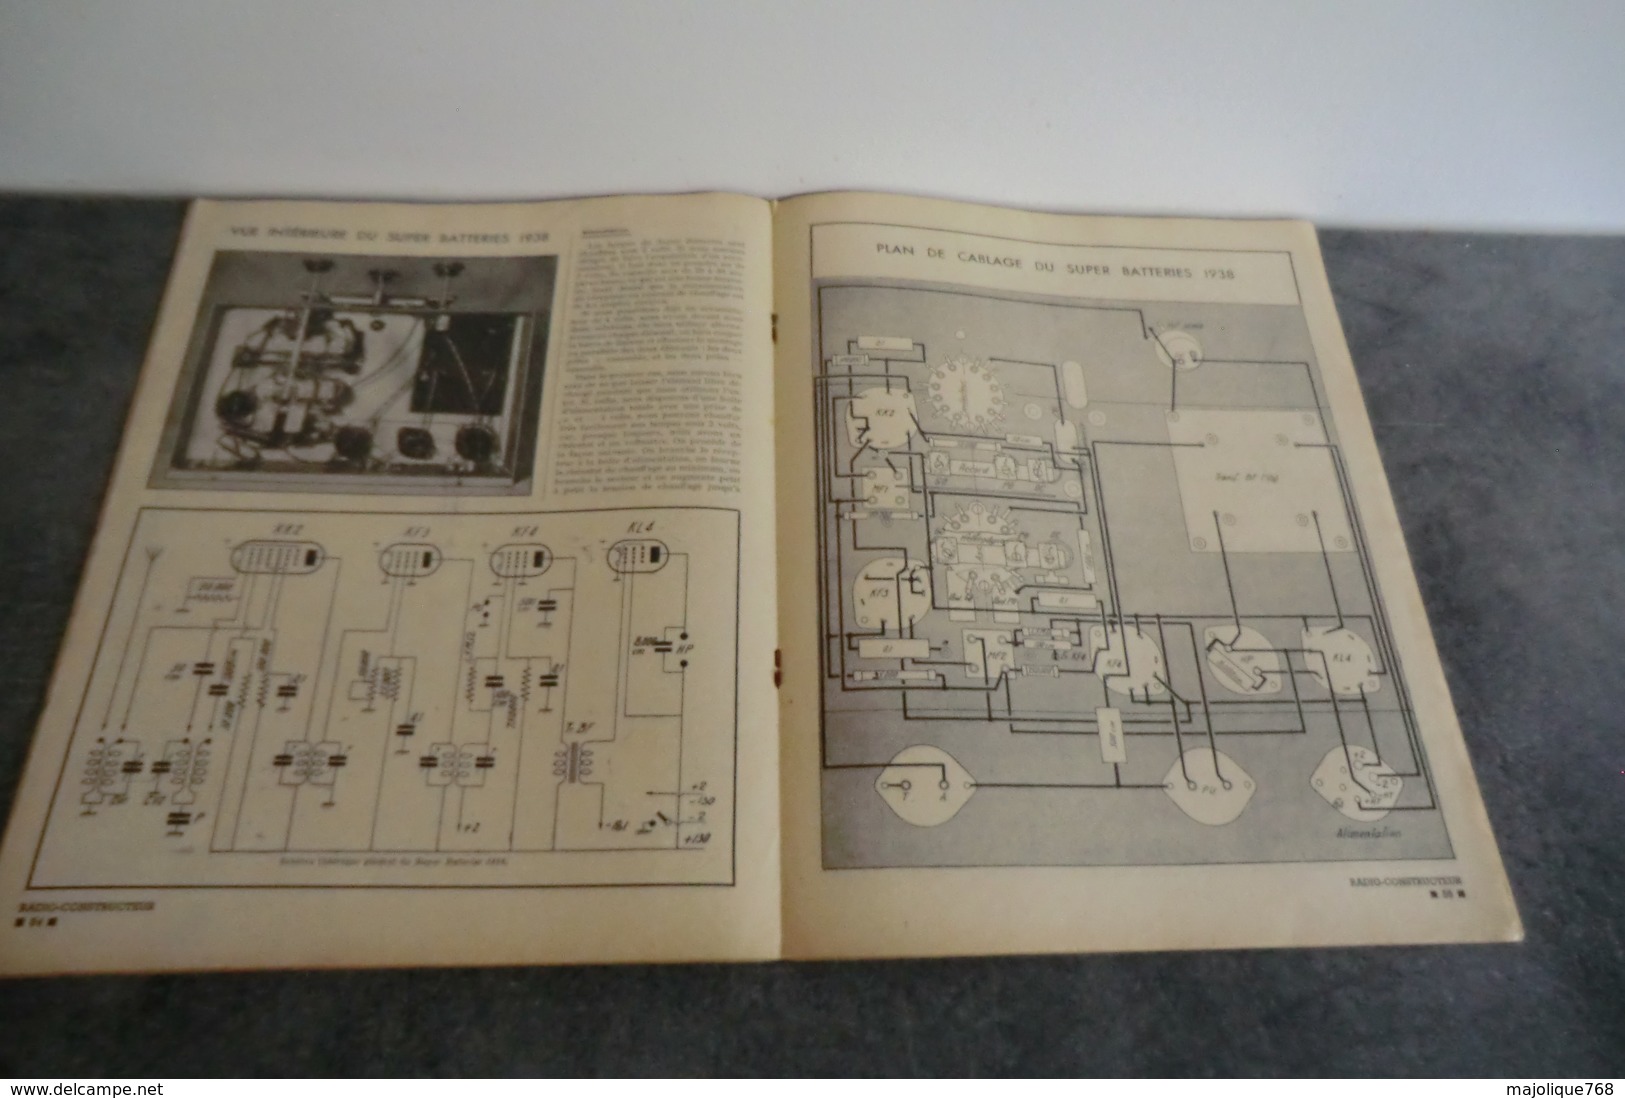 Revue Radio Construction N°18 - 1 Mars 1938 - - Components